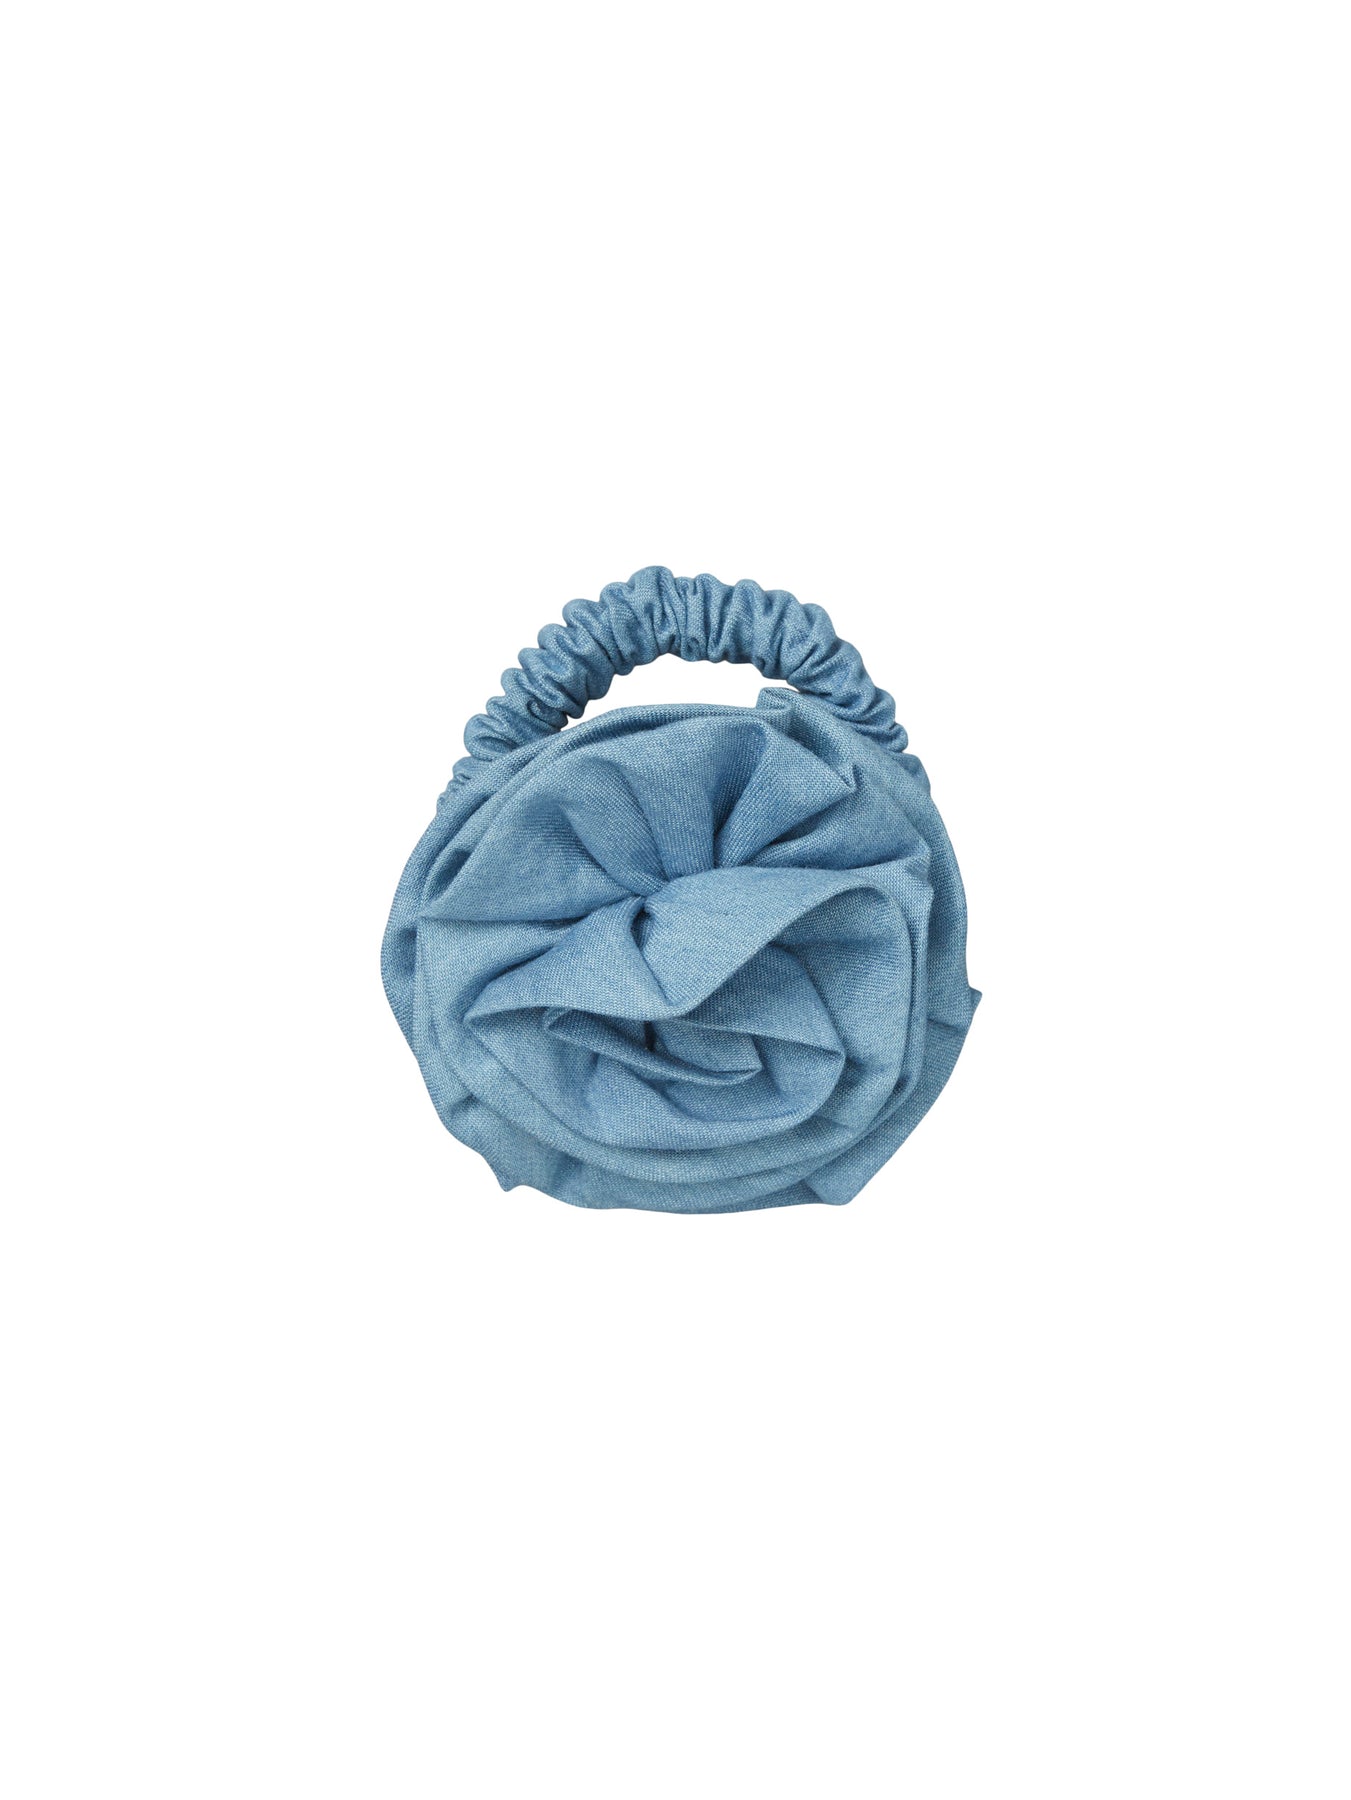 Denima Flower Hair Tie - Coronet Blue